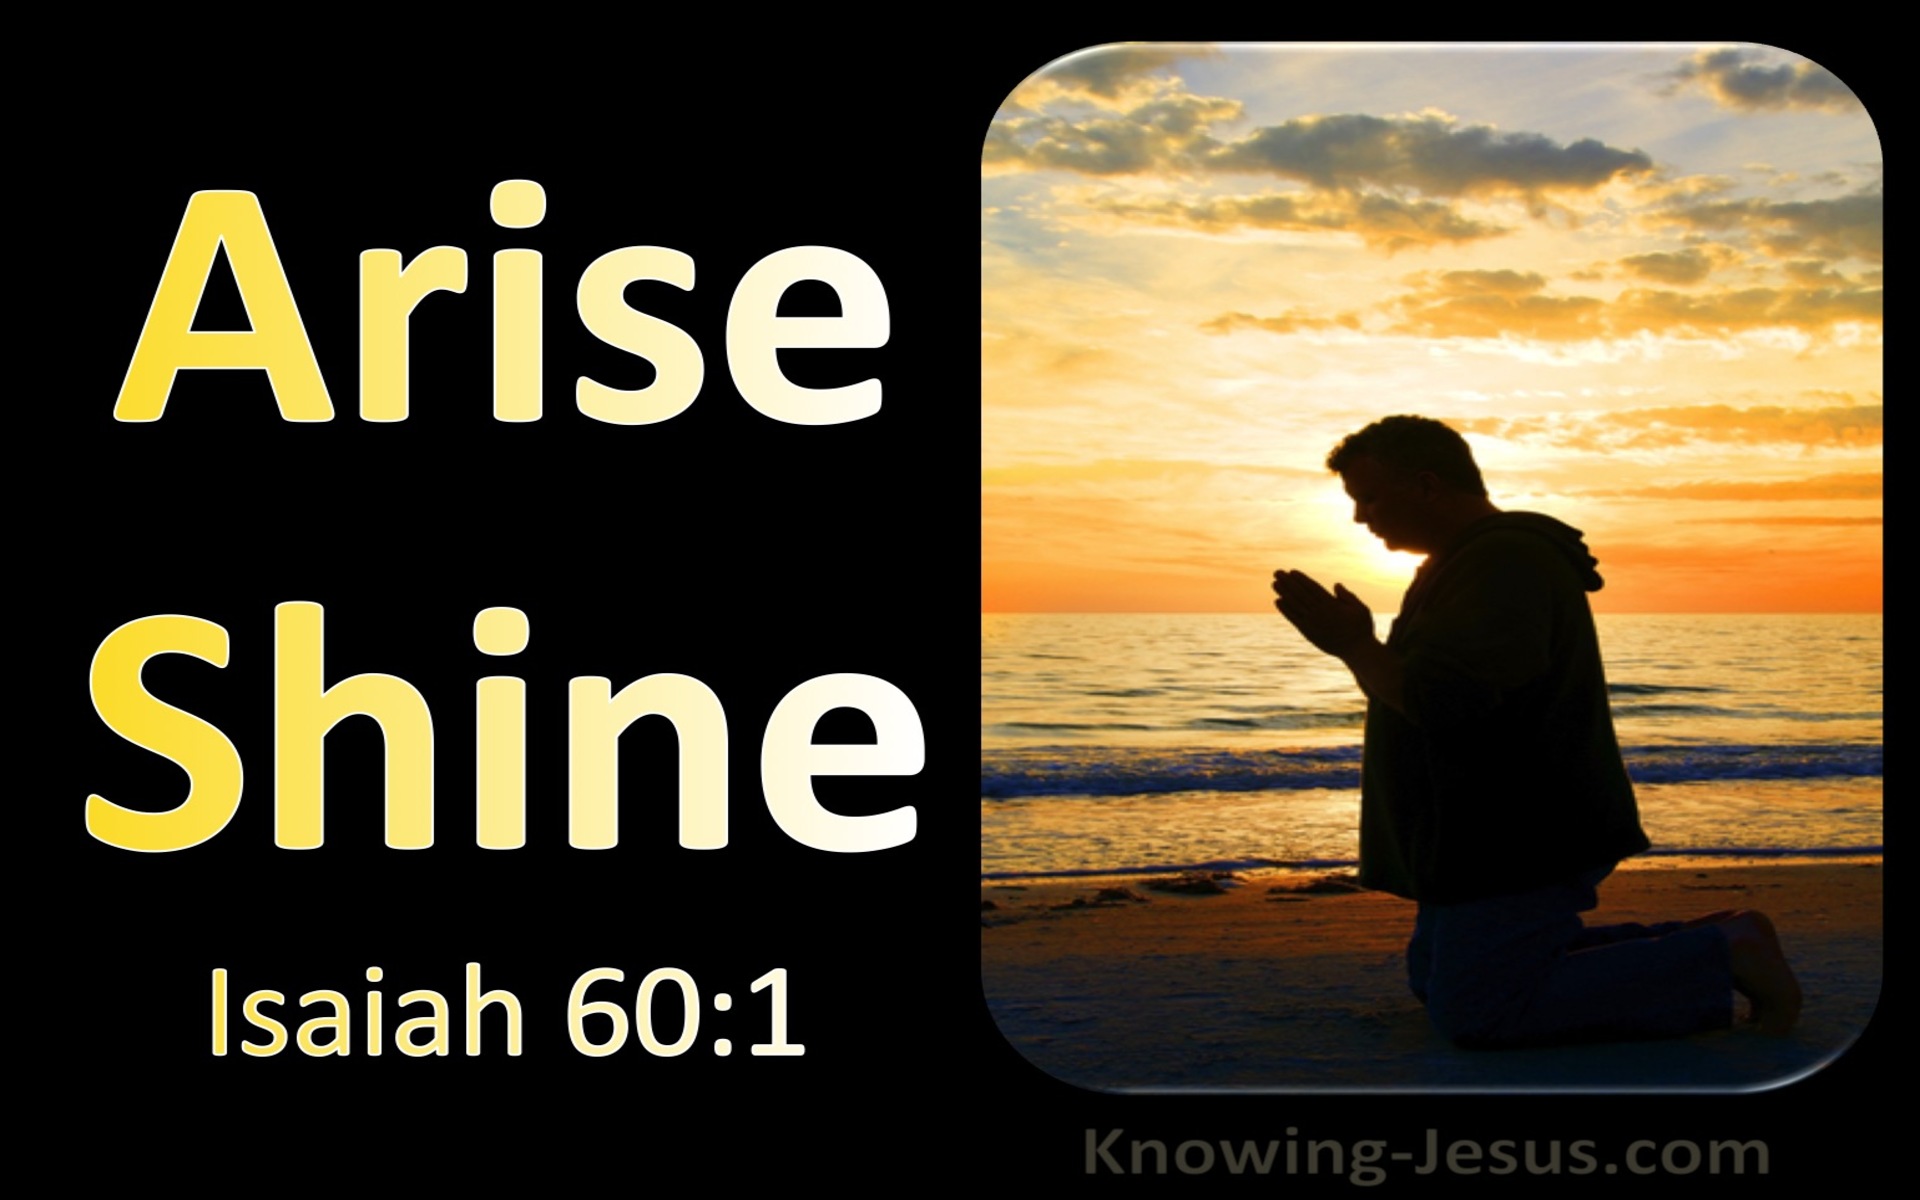 Isaiah 60:1 Arise Shine (utmost)02:19